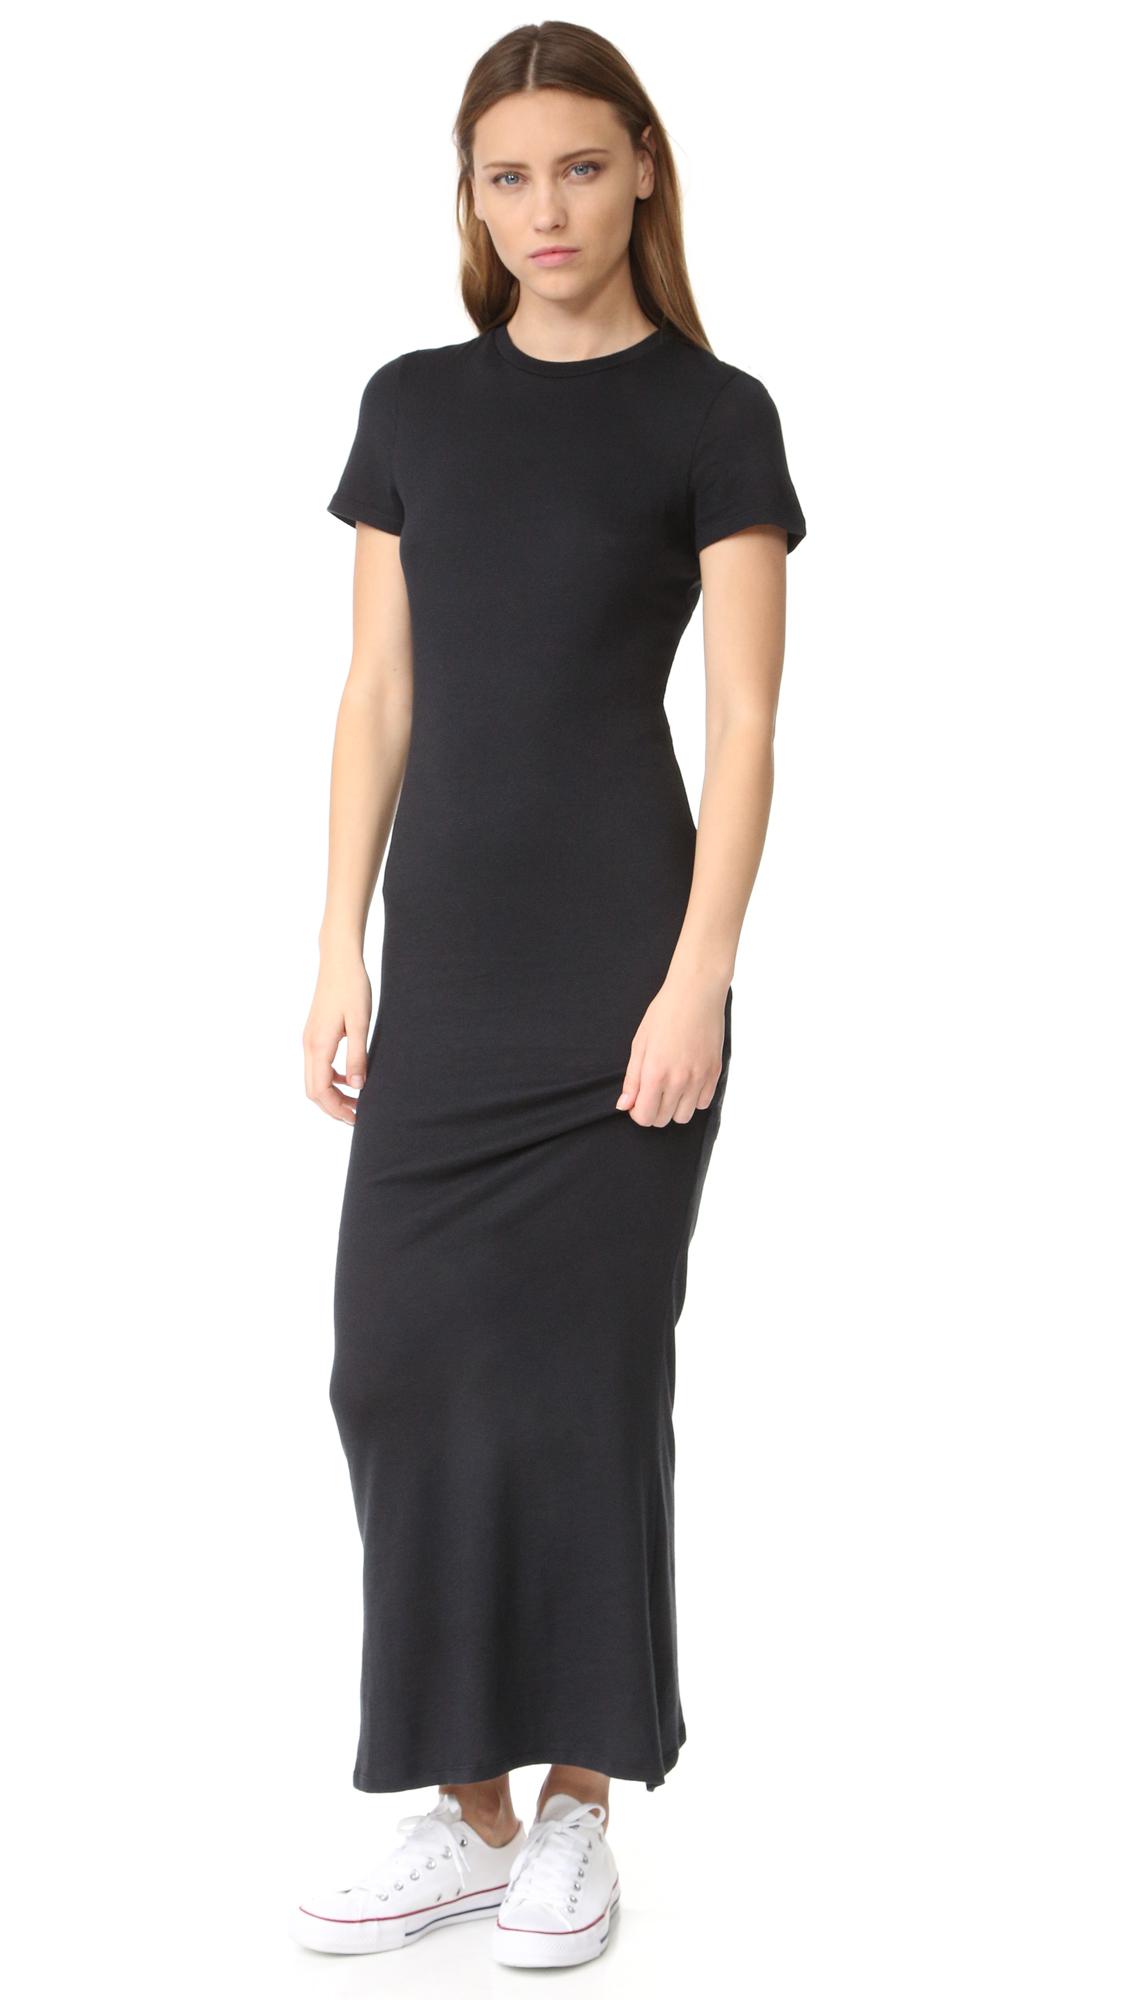 Zoe Karssen Cotton T-shirt Maxi Dress in Black - Lyst